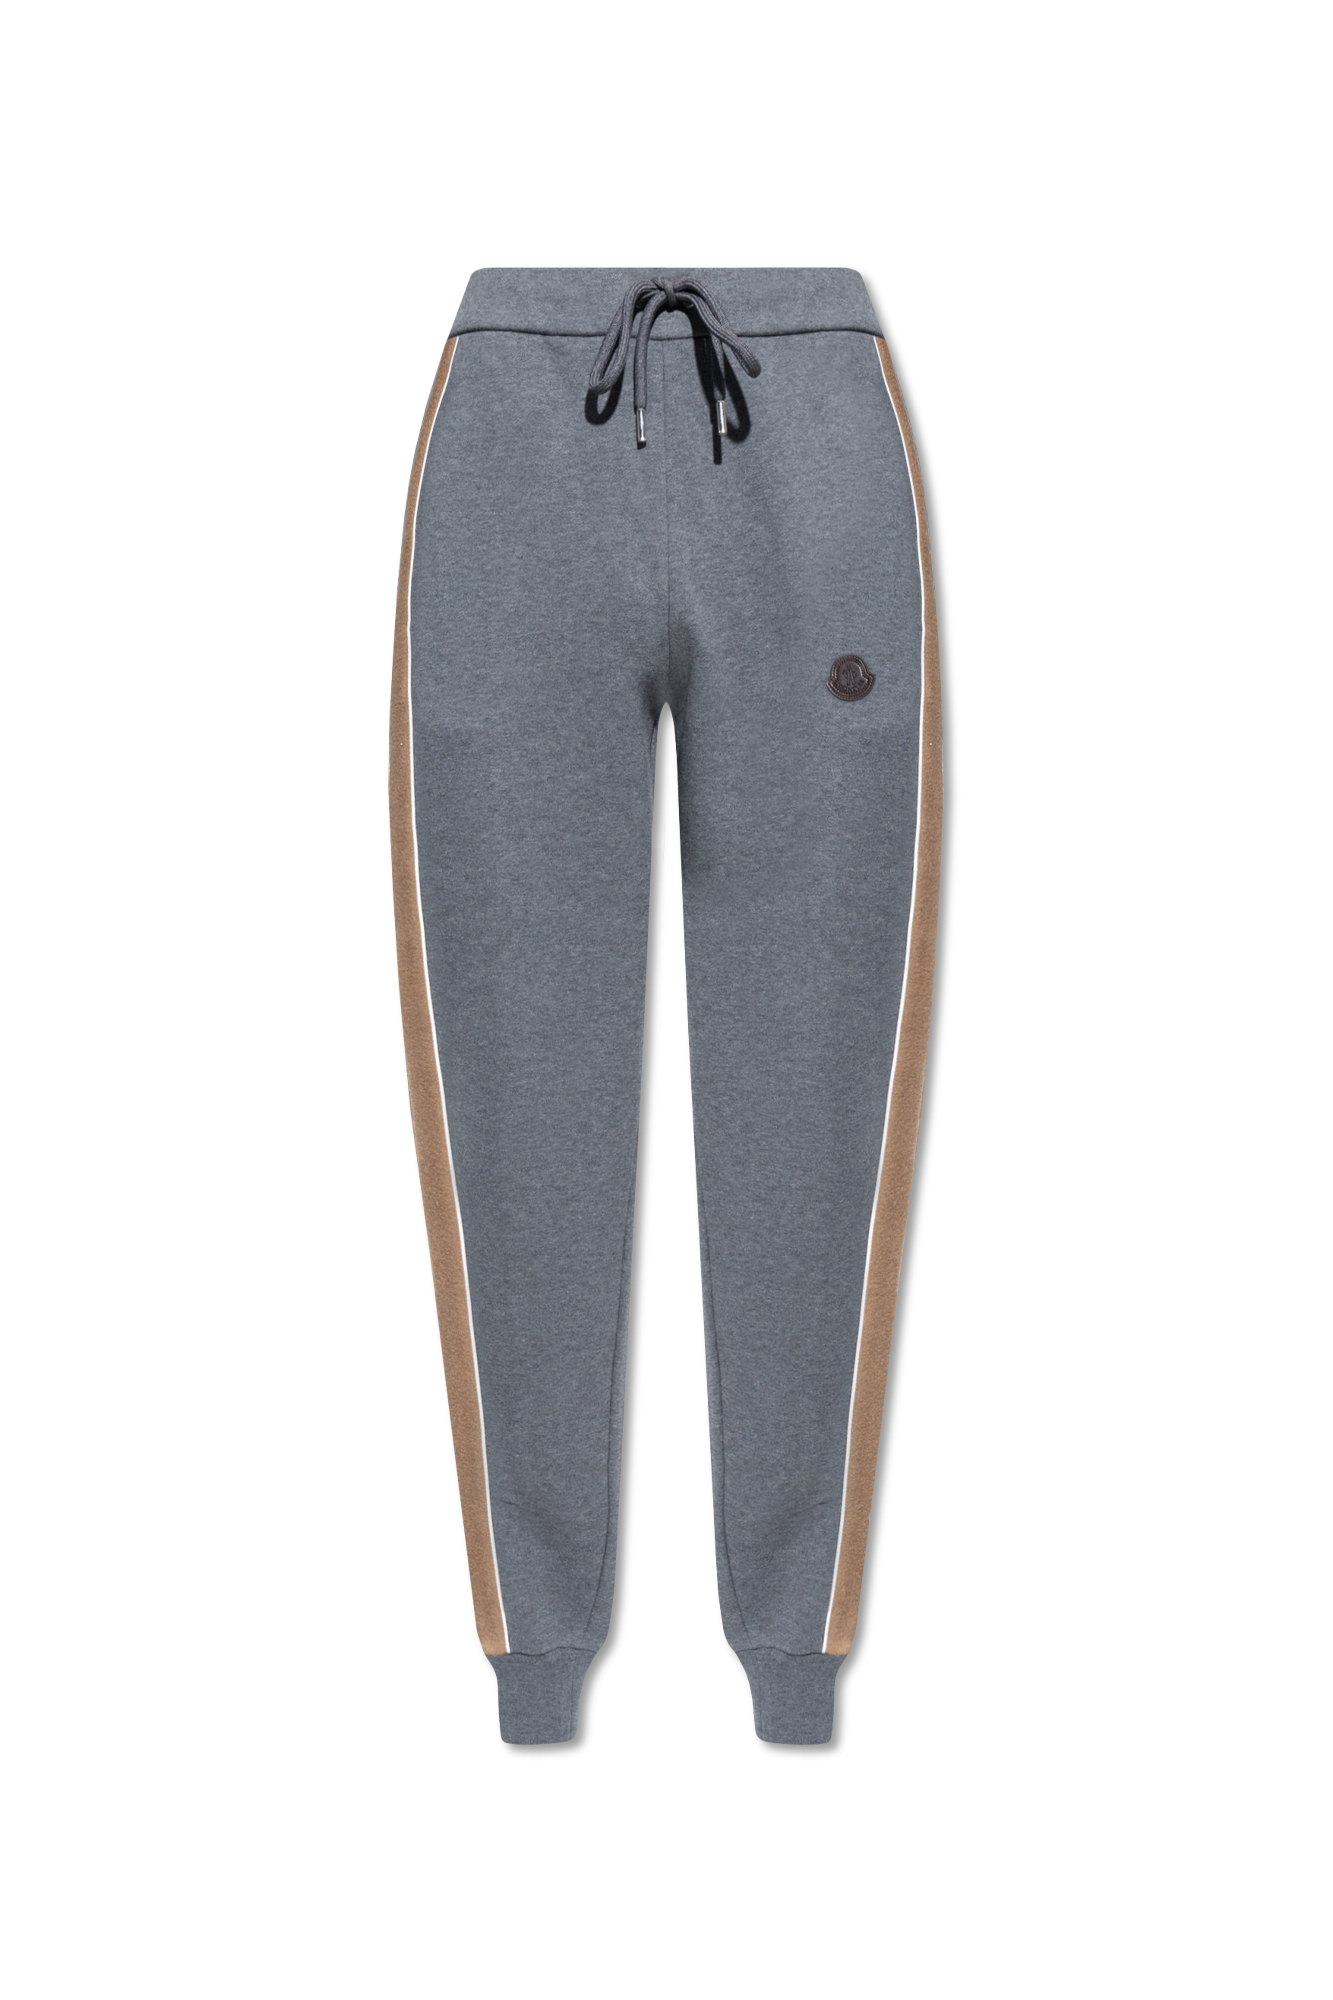 Grey Straight leg stretchy capri pants offers supreme protection